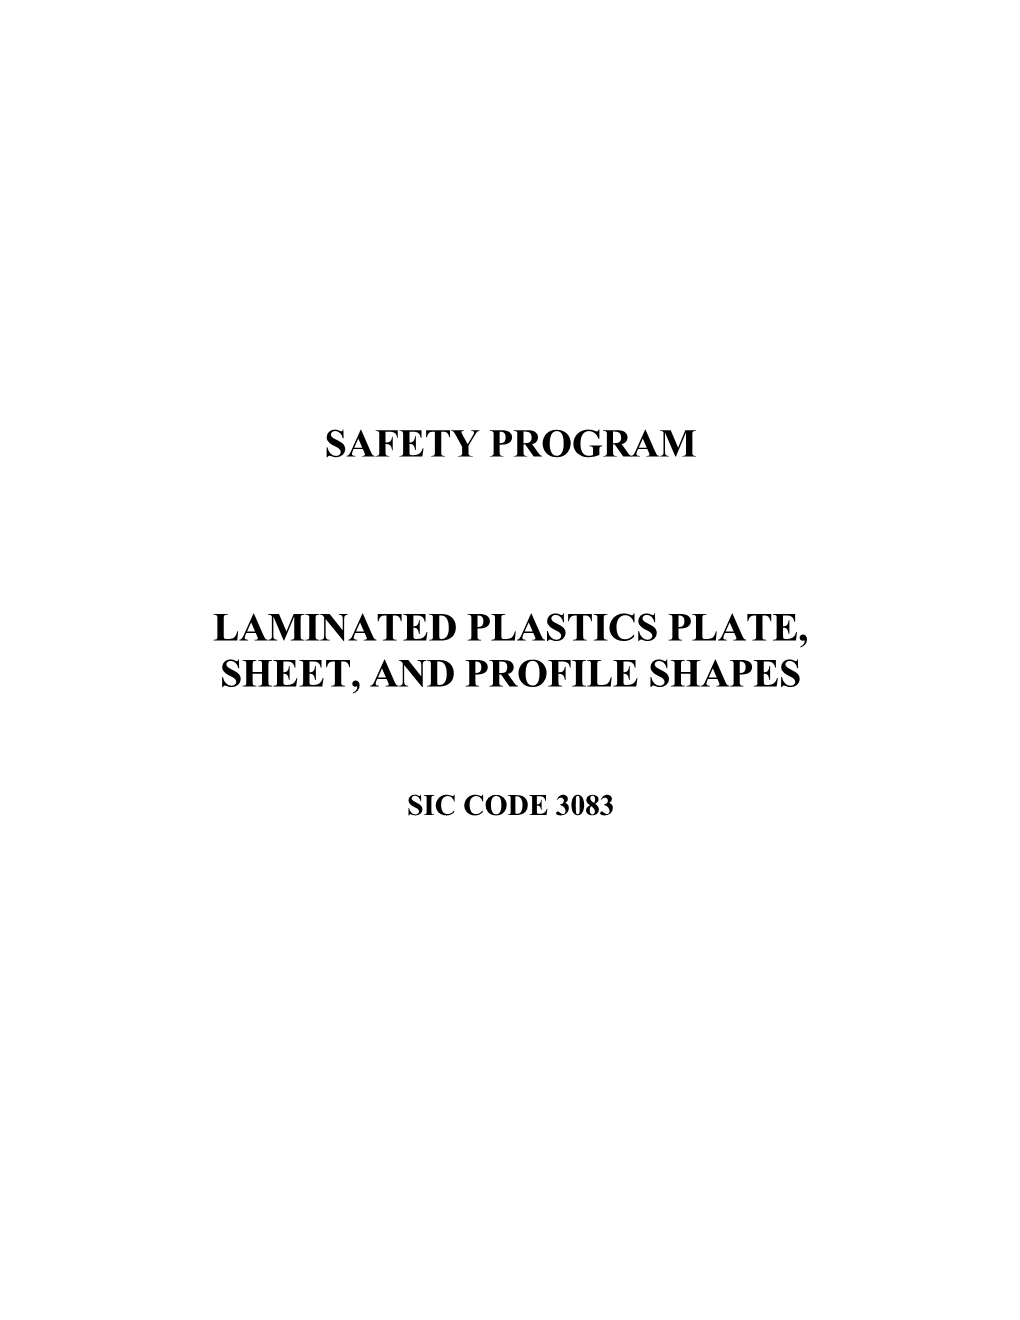 Laminated Plastics Safety Program